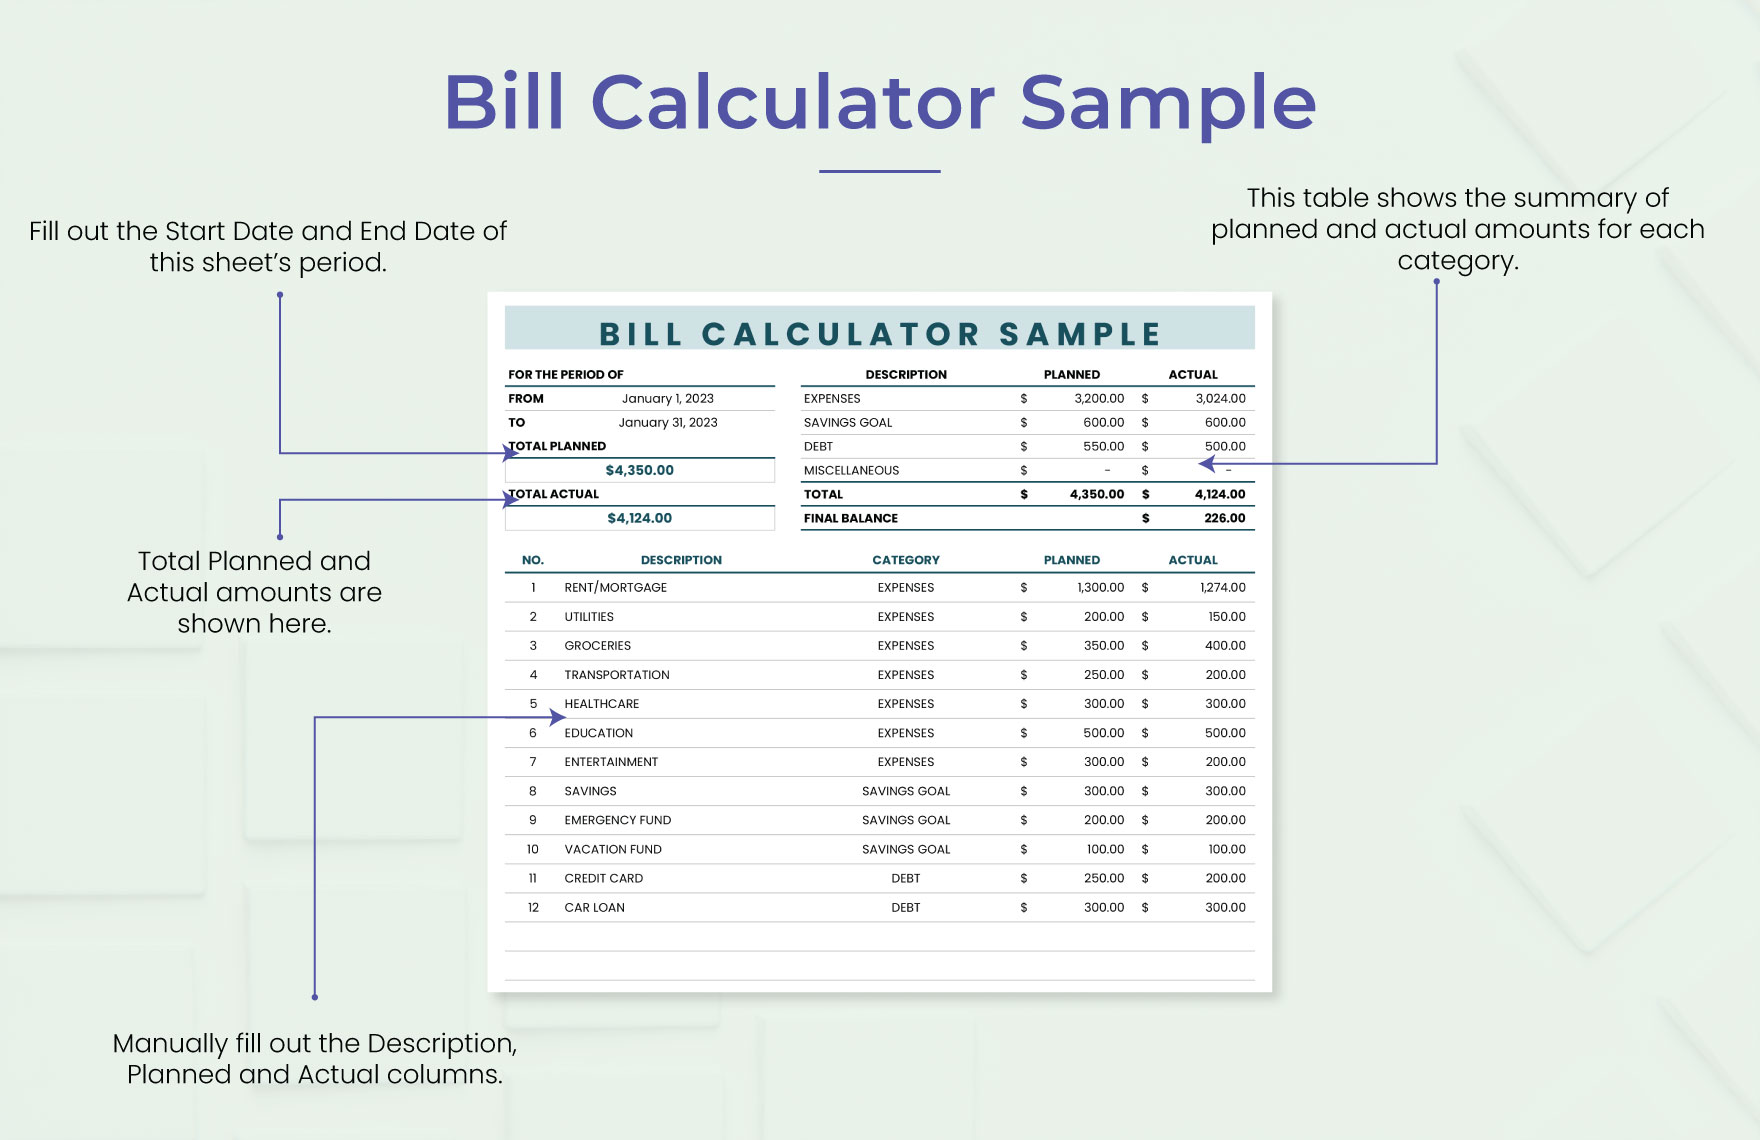 Bill Calculator Sample Template